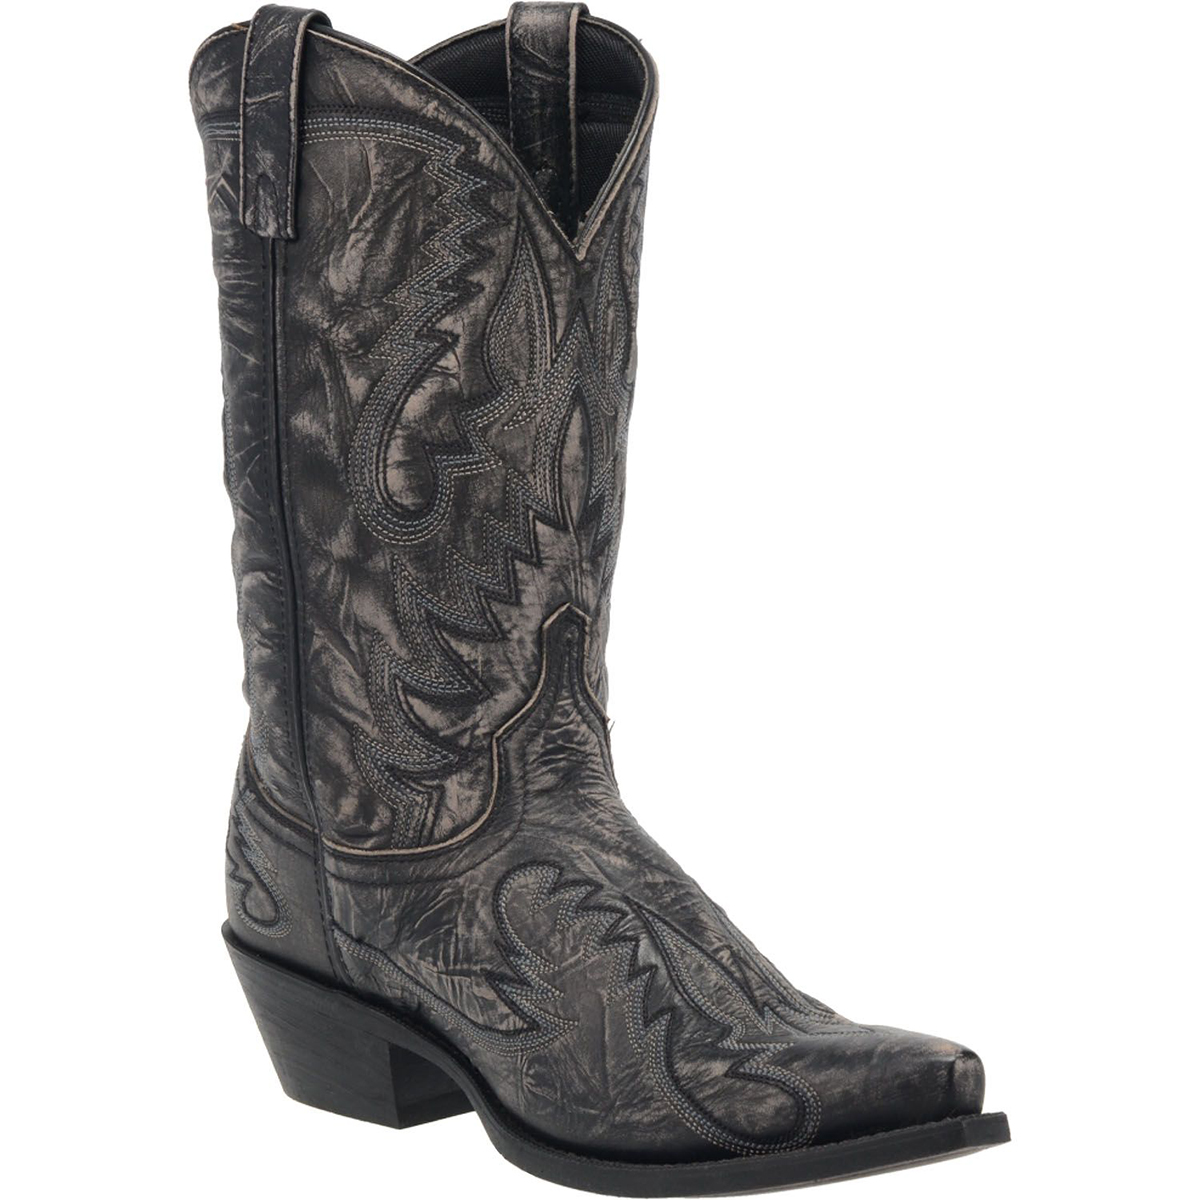 Laredo Men's Garrett Leather Boot Black - Extra Wide 68407